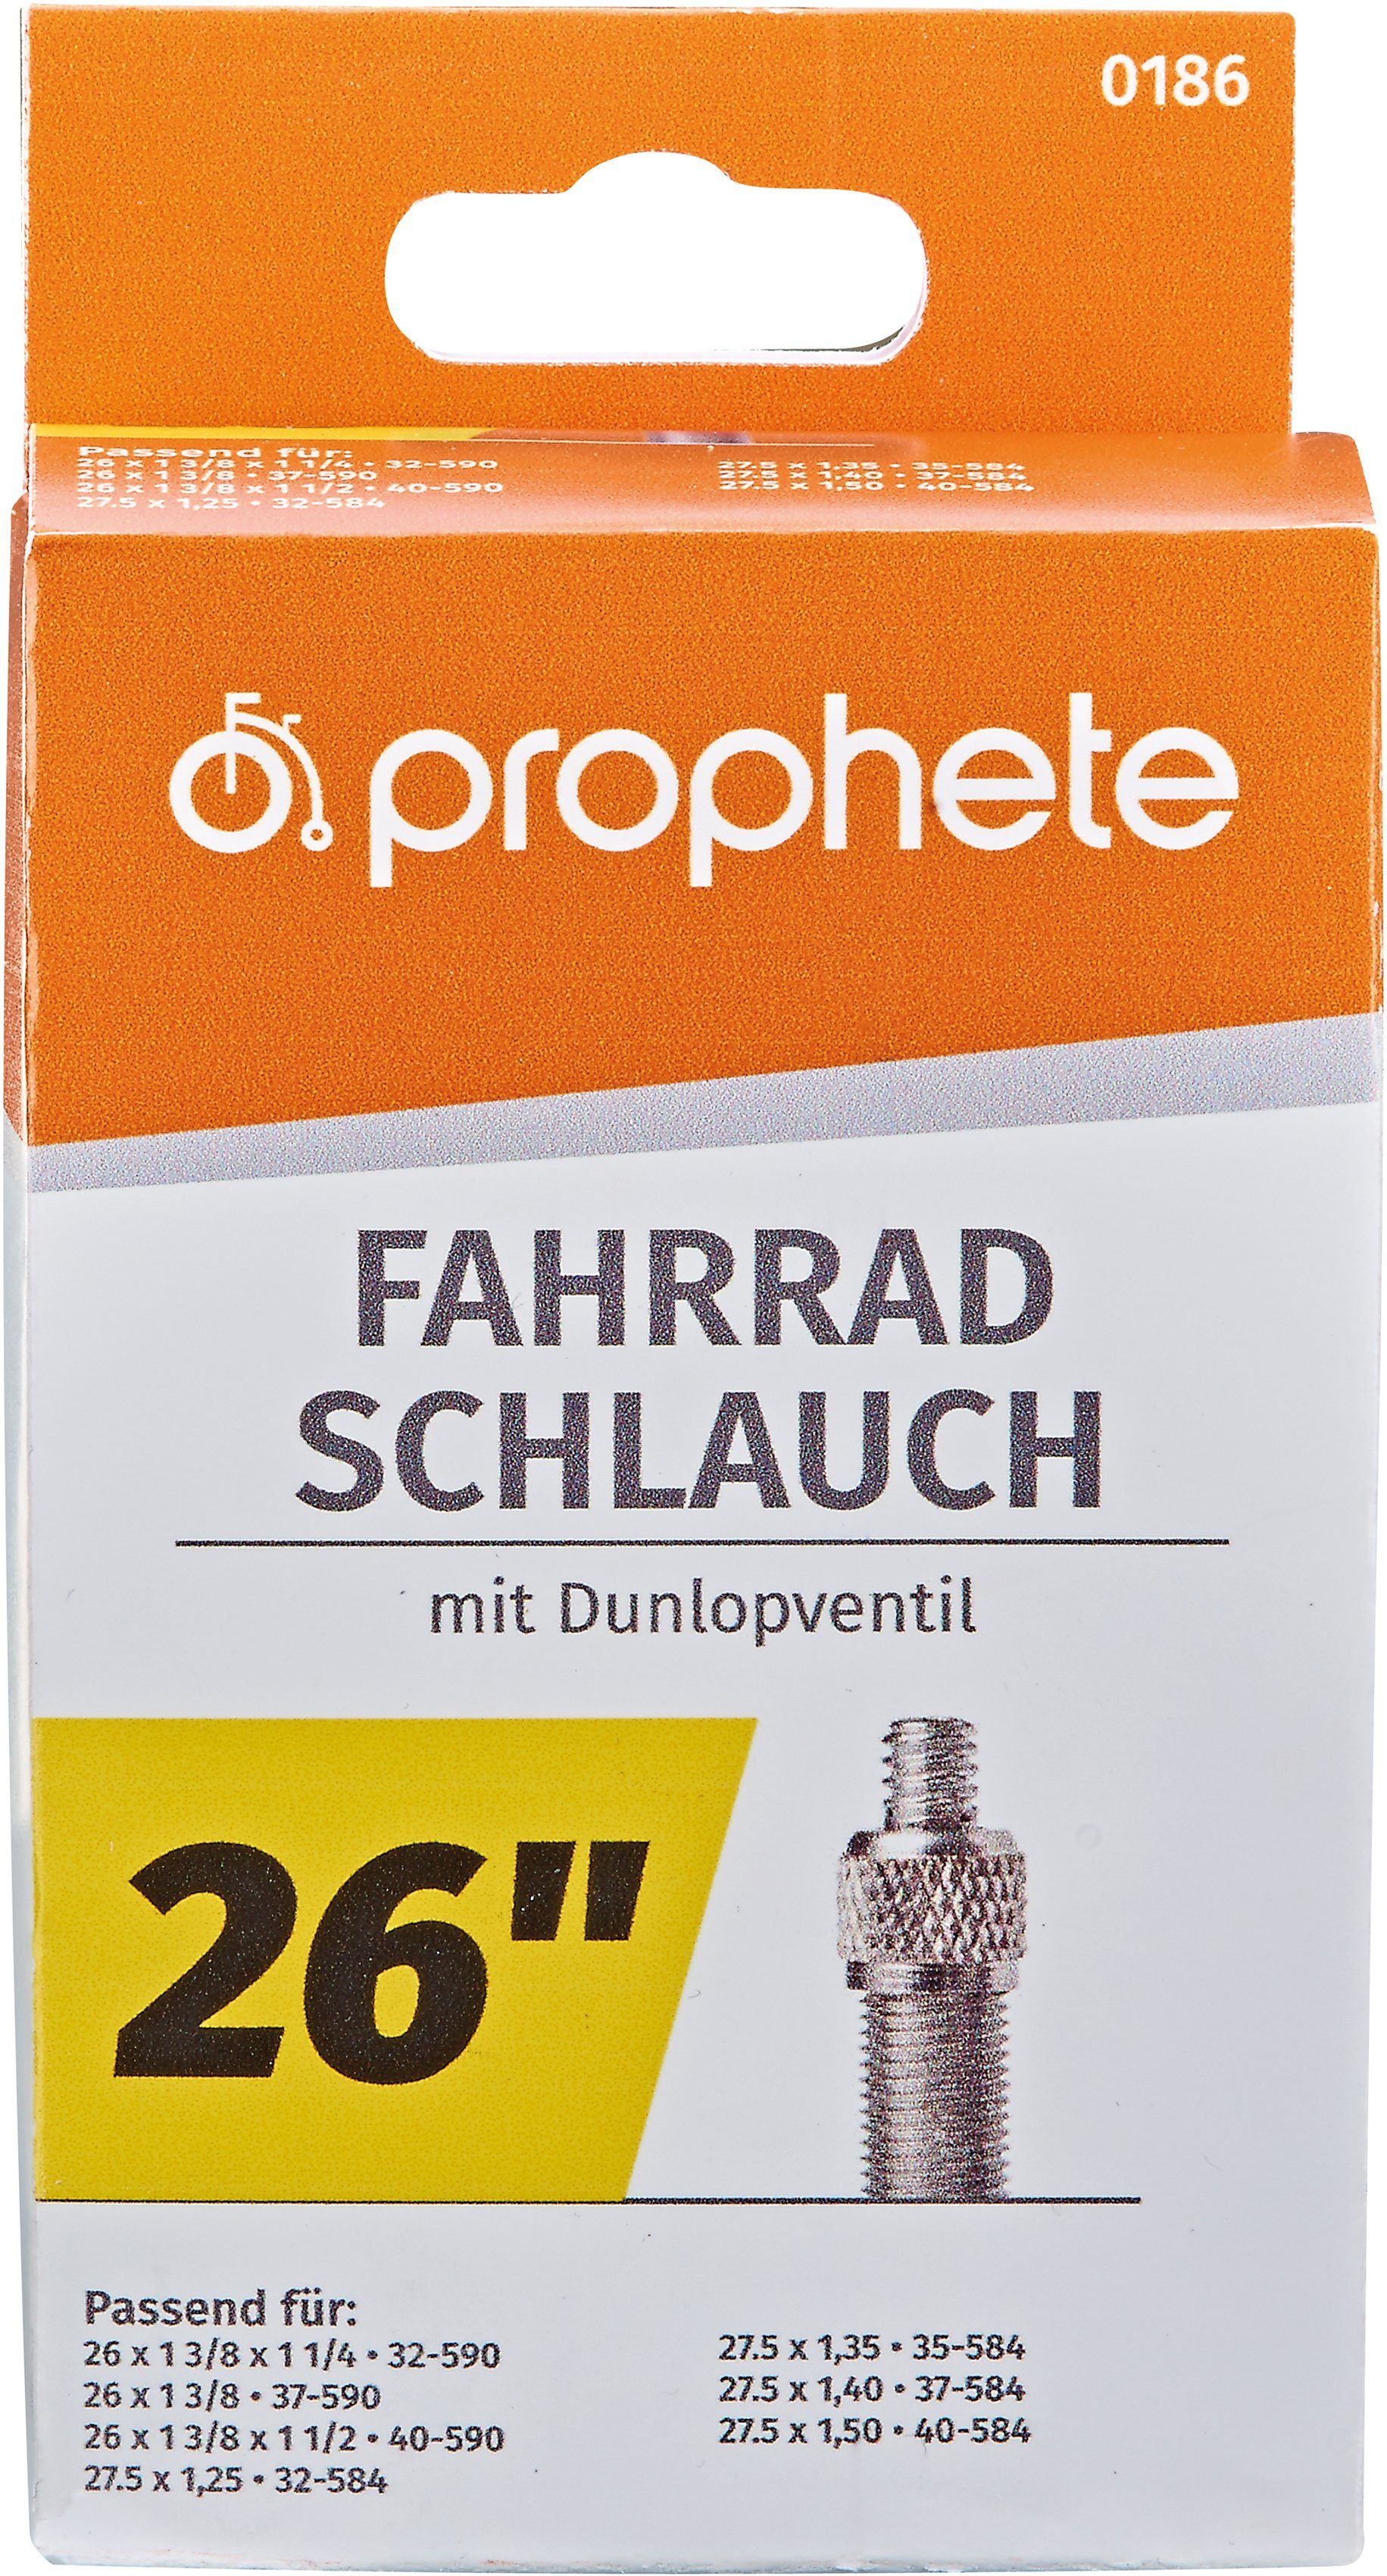 Prophete Fahrradschlauch Fahrradschlauch, 26 Zoll (66,04 cm)